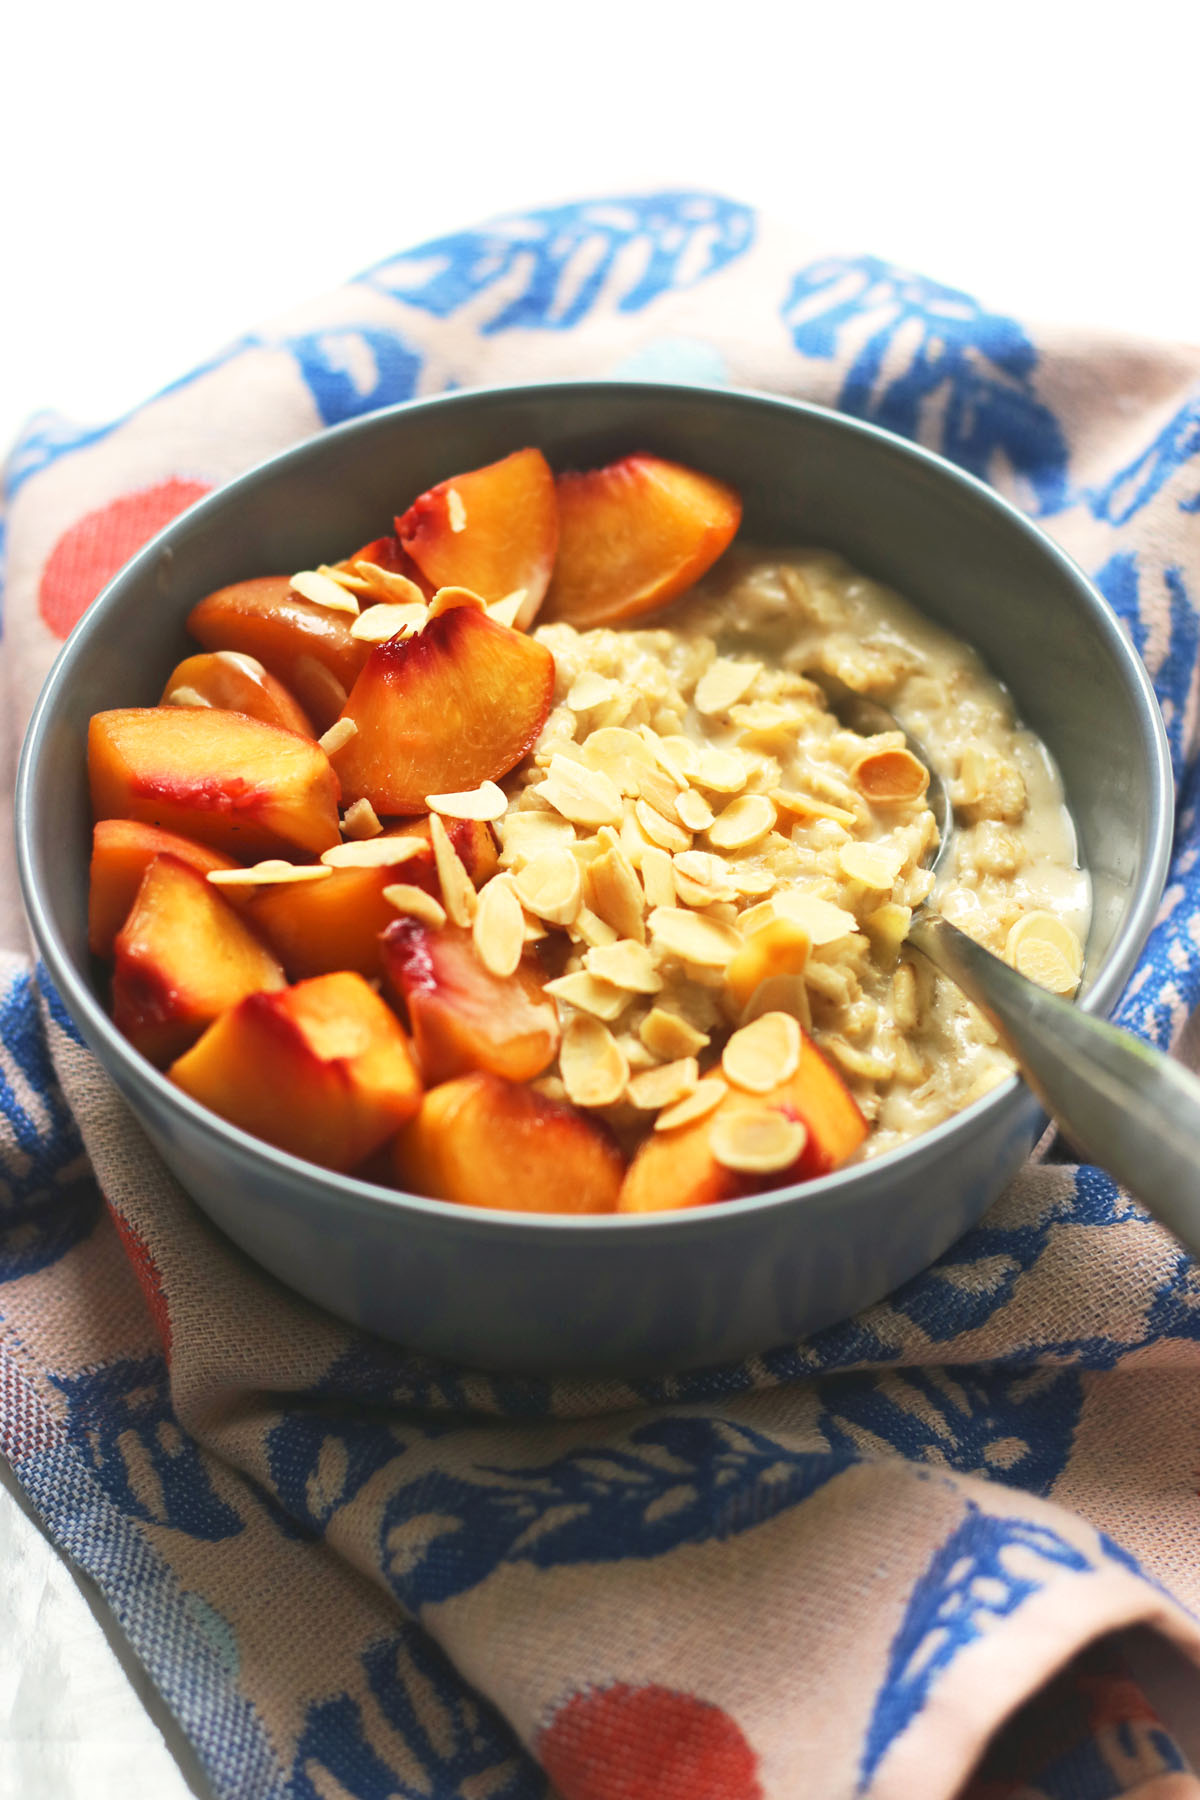 Cardamom porridge with almonds and peaches